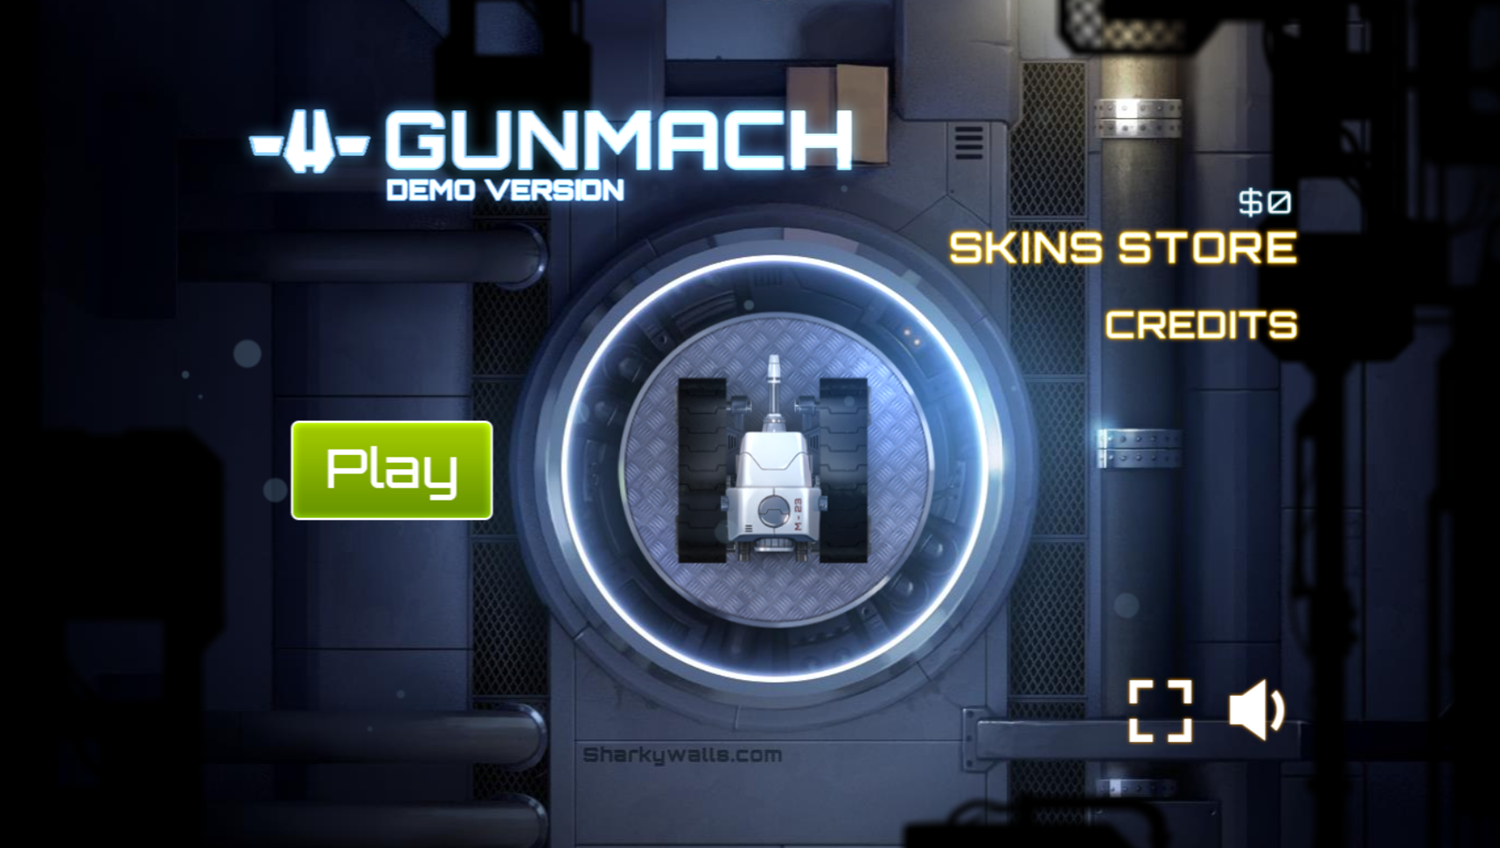 Gunmach Game Welcome Screen Screenshot.